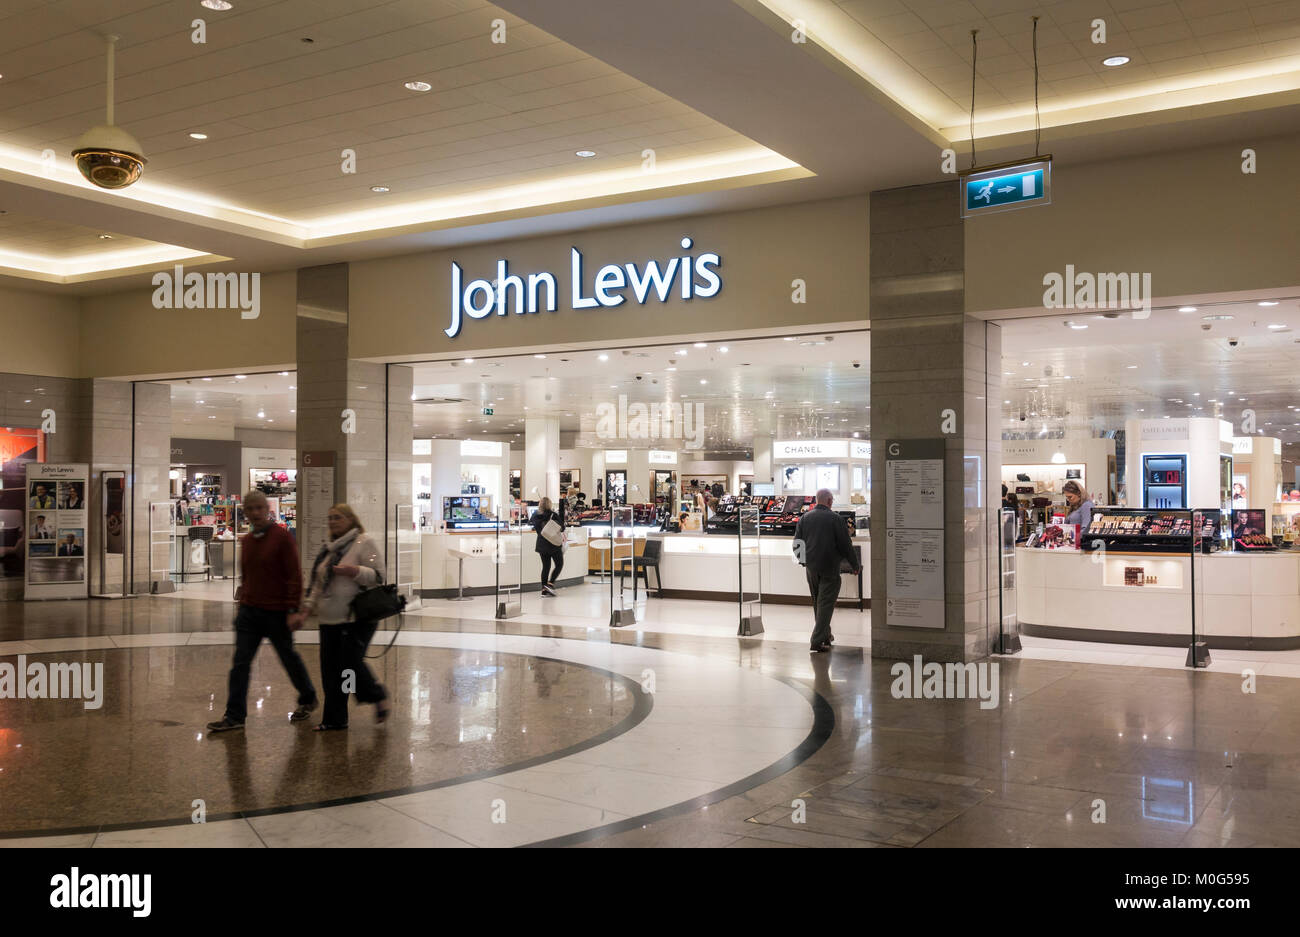 John Lewis Department Store in der intu Trafford Centre, Manchester. Stockfoto